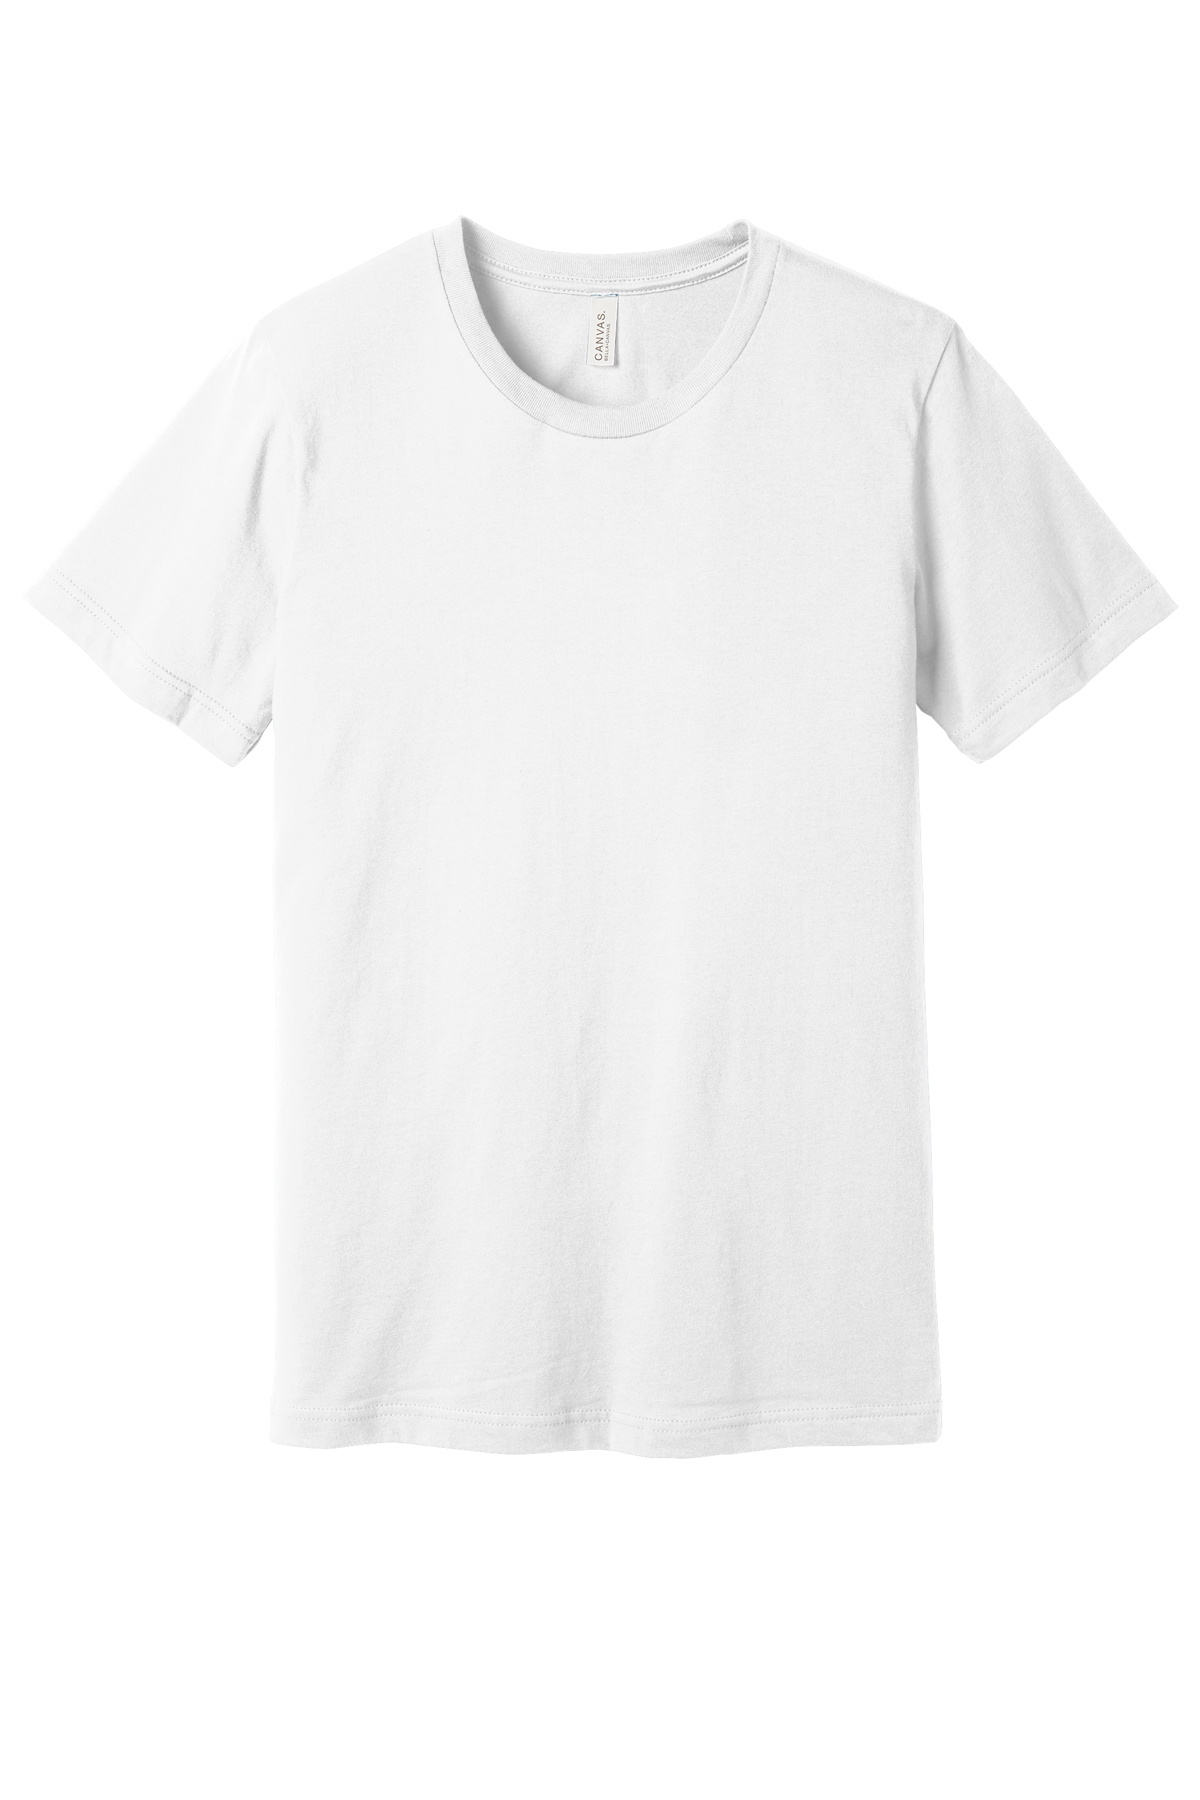 CustomCat Just A Louisiana Girl in A Colorado World T-Shirt - 3001C Bella + Canvas Unisex Jersey Short-Sleeve T-Shirt White X-Small